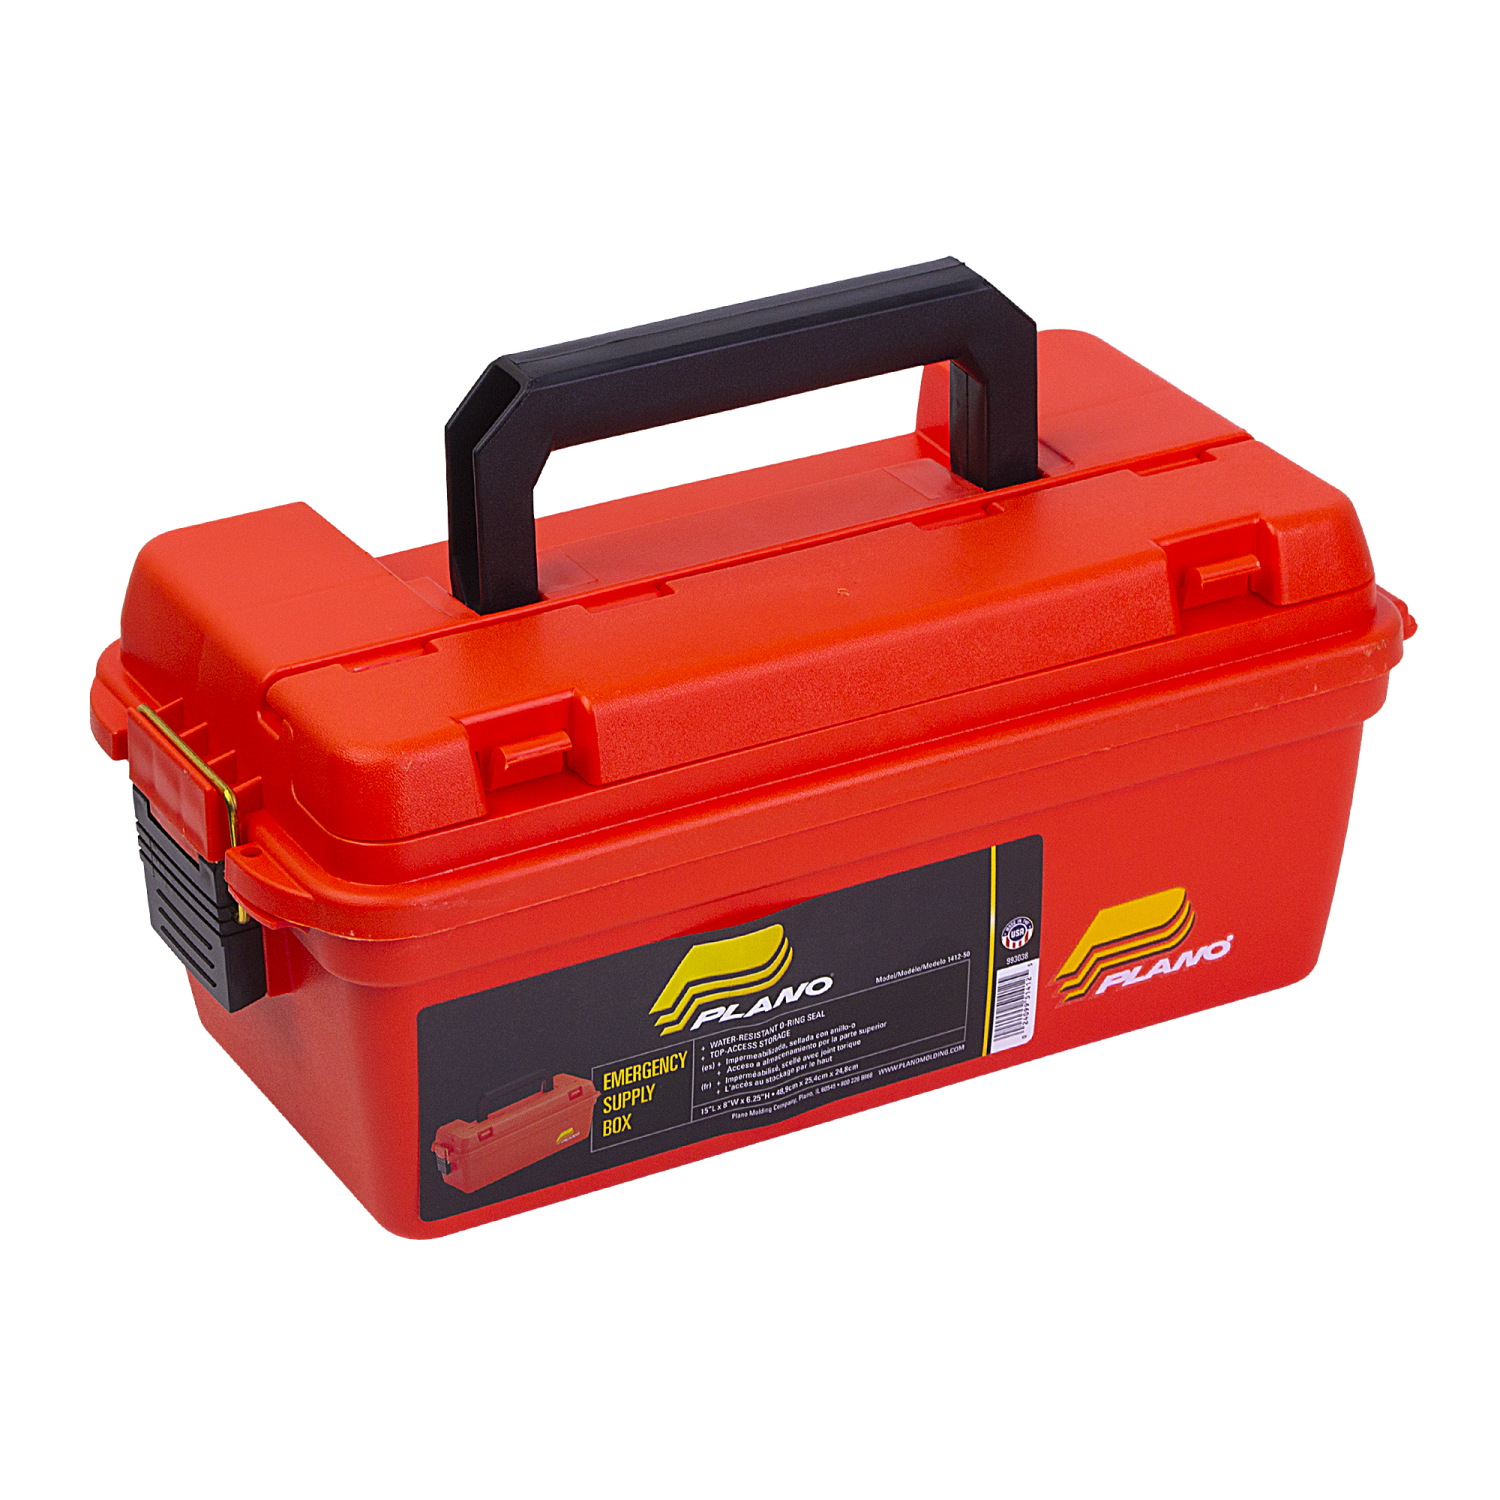 Ящик Plano Emergency Supply Box 141250 морской